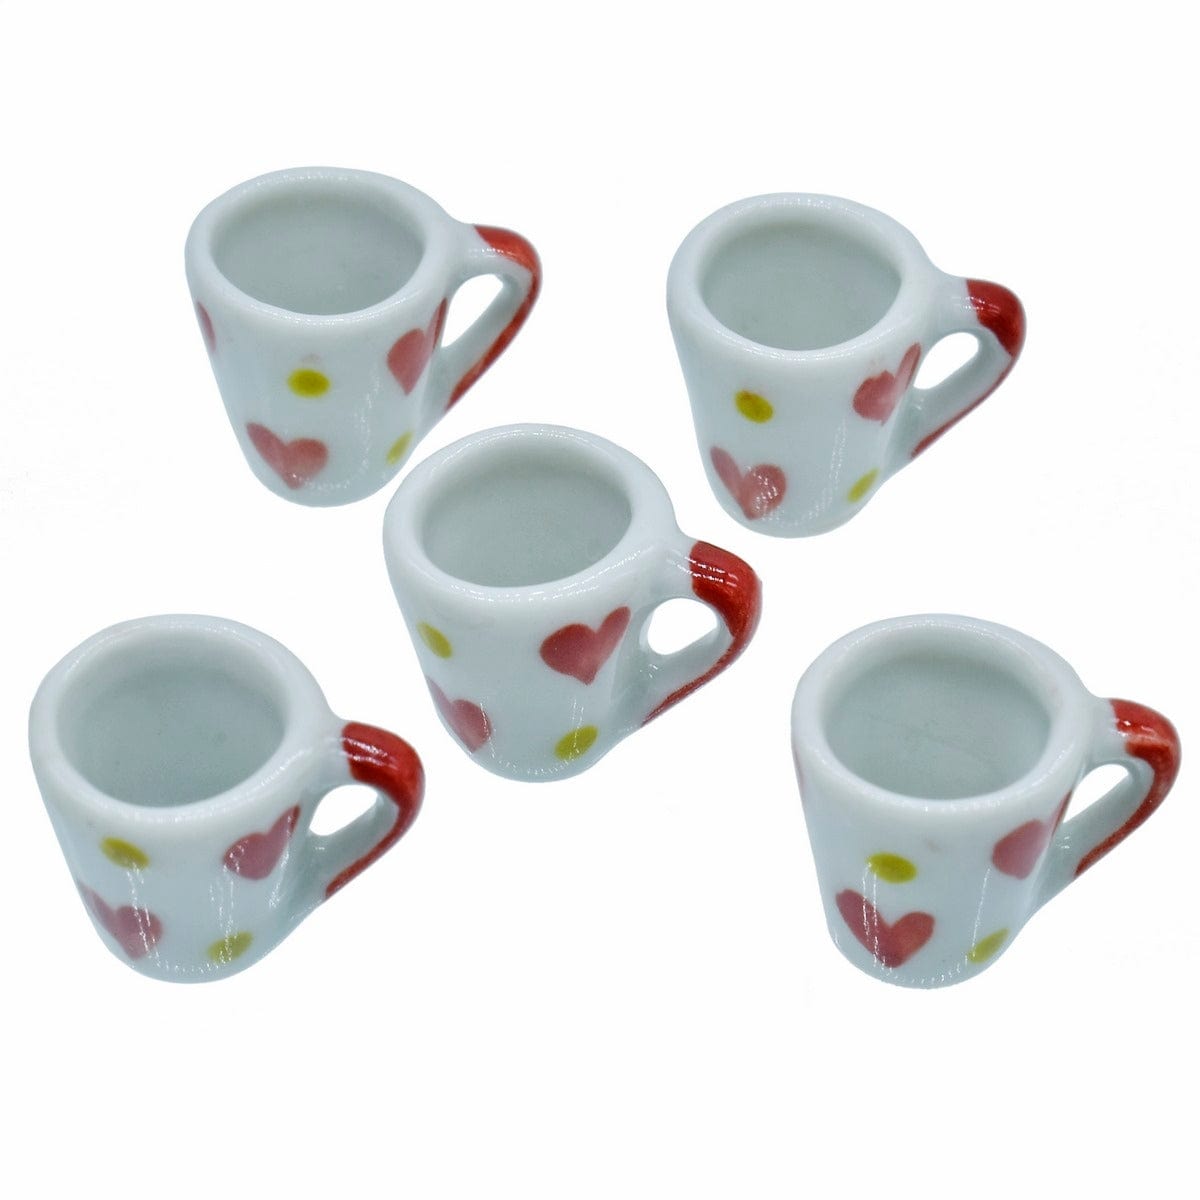 jags-mumbai Miniature Miniature Ceramics Cup Mini Colour Full 5 Pcs Set M10PCUP